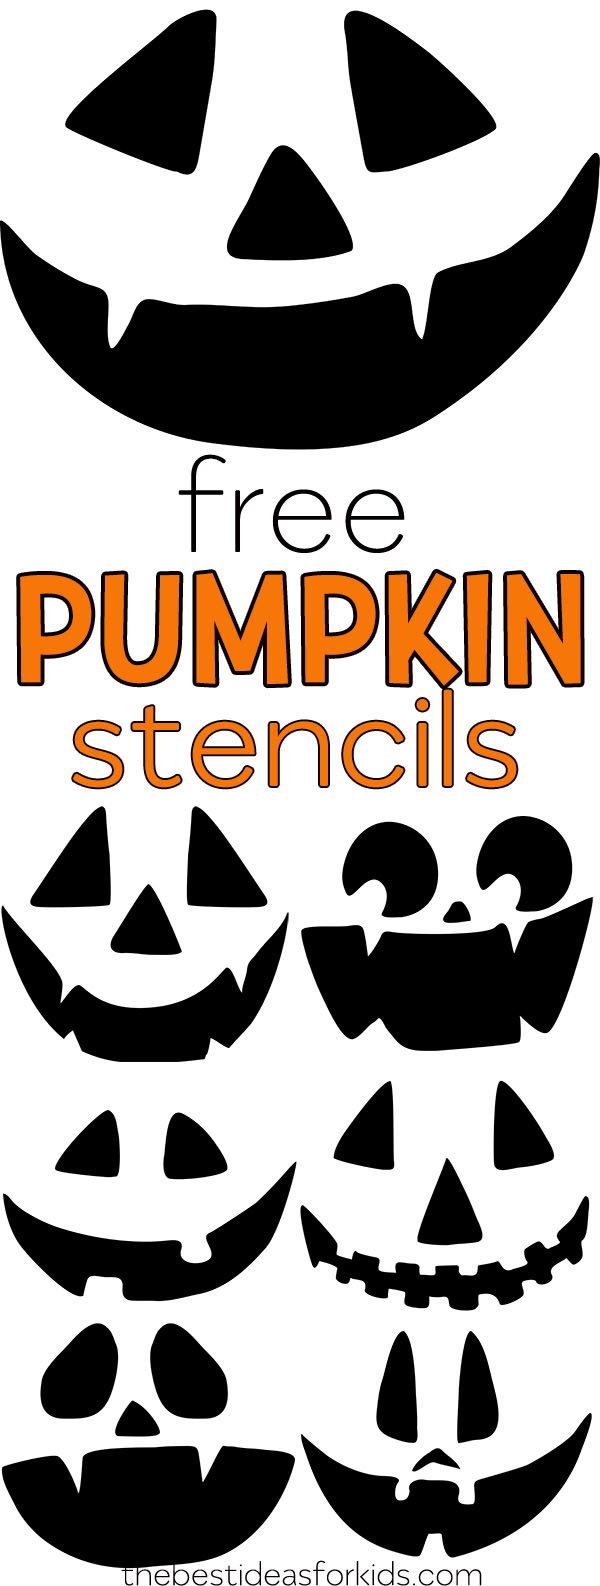 Pumpkin Stencils